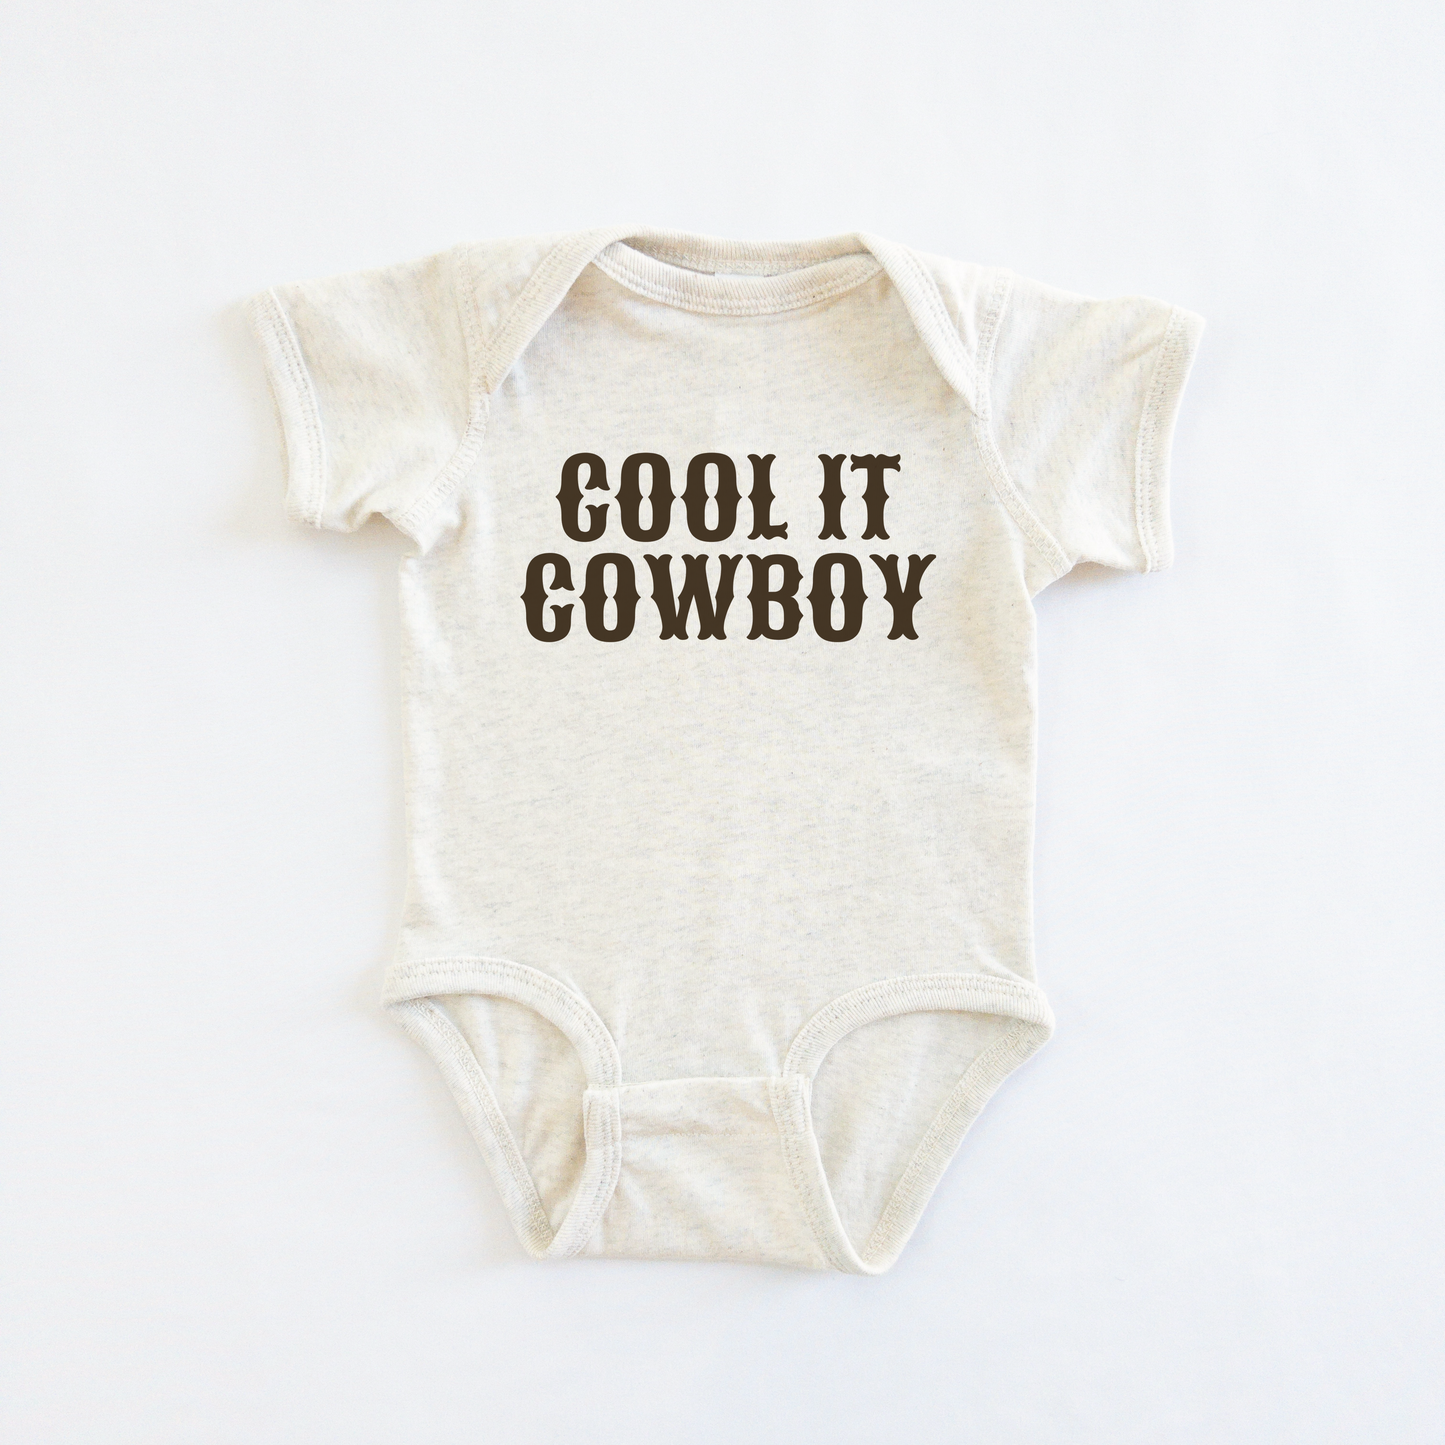 Cool It Cowboy Wild West Theme Toddler Kids T-Shirt or Baby Bodysuit